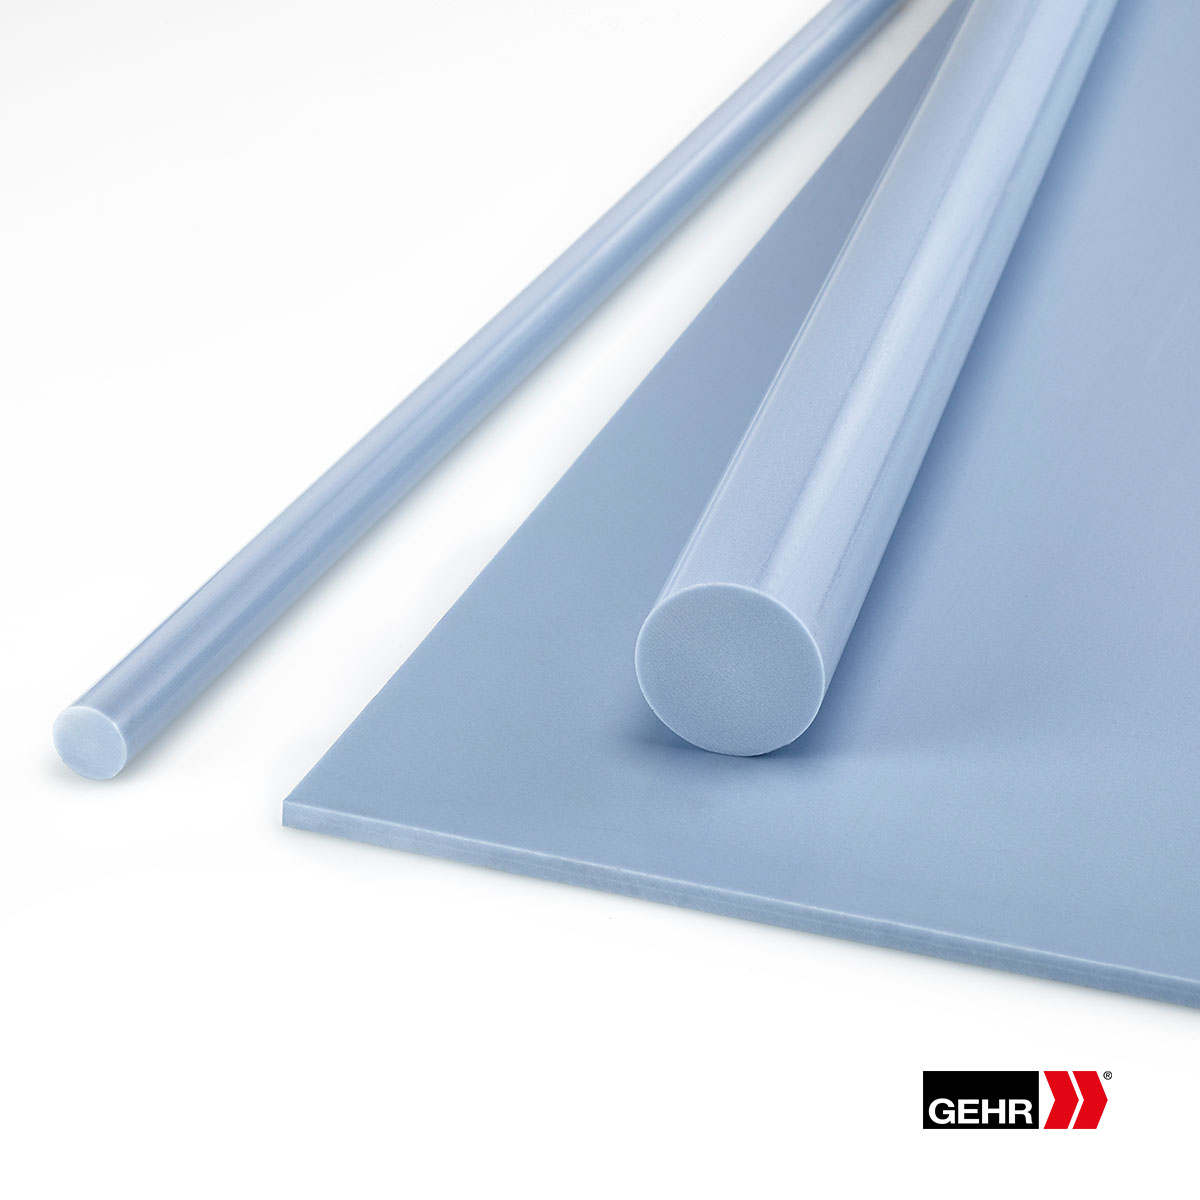 GLIDE-GEHR POM-10PE Sheets 1000 x 10 mm light blue